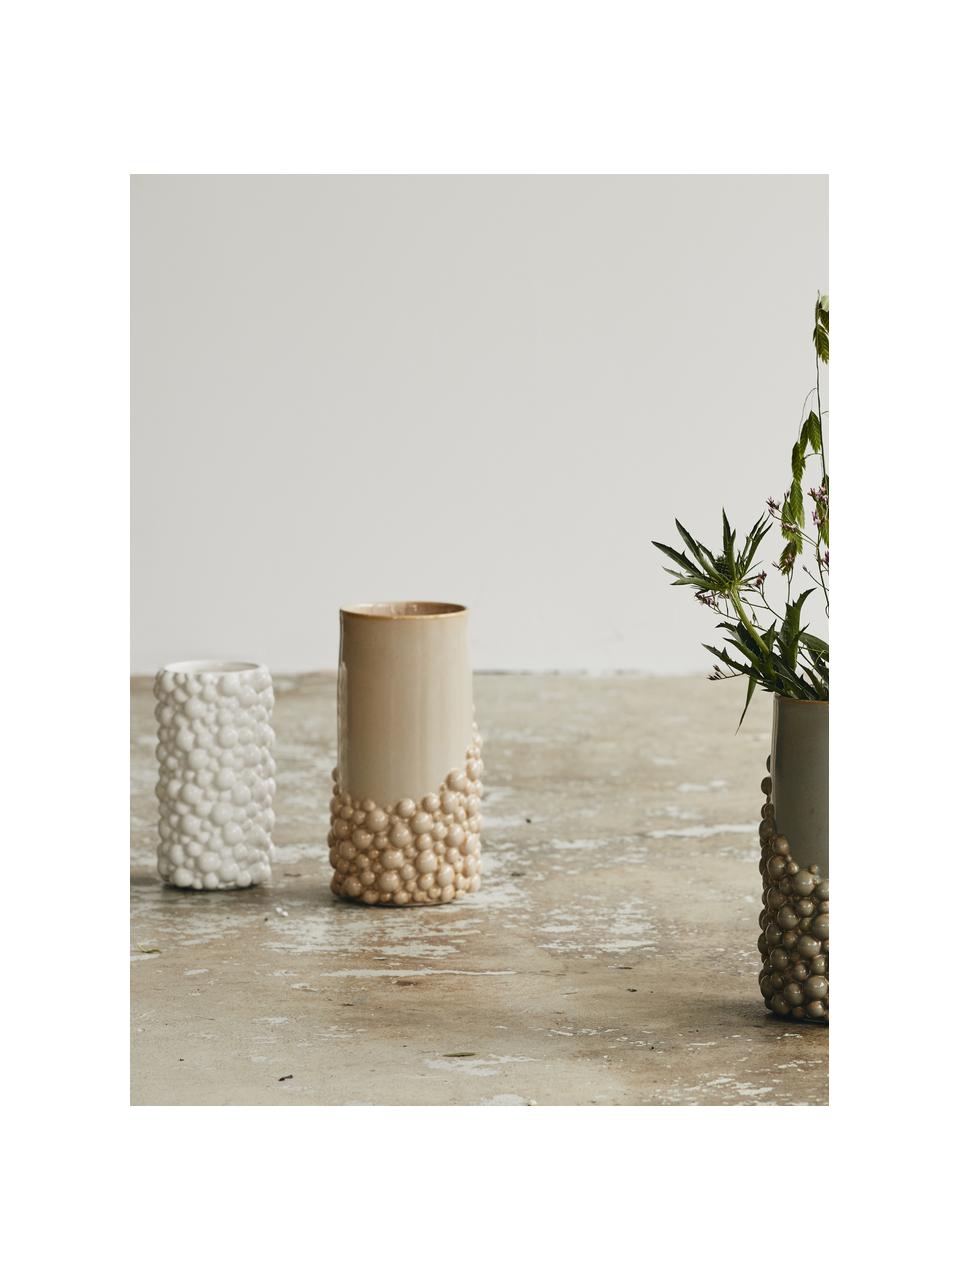 Moderne Keramik-Vase Naxos, Keramik, Weiß, Ø 9 x H 20 cm